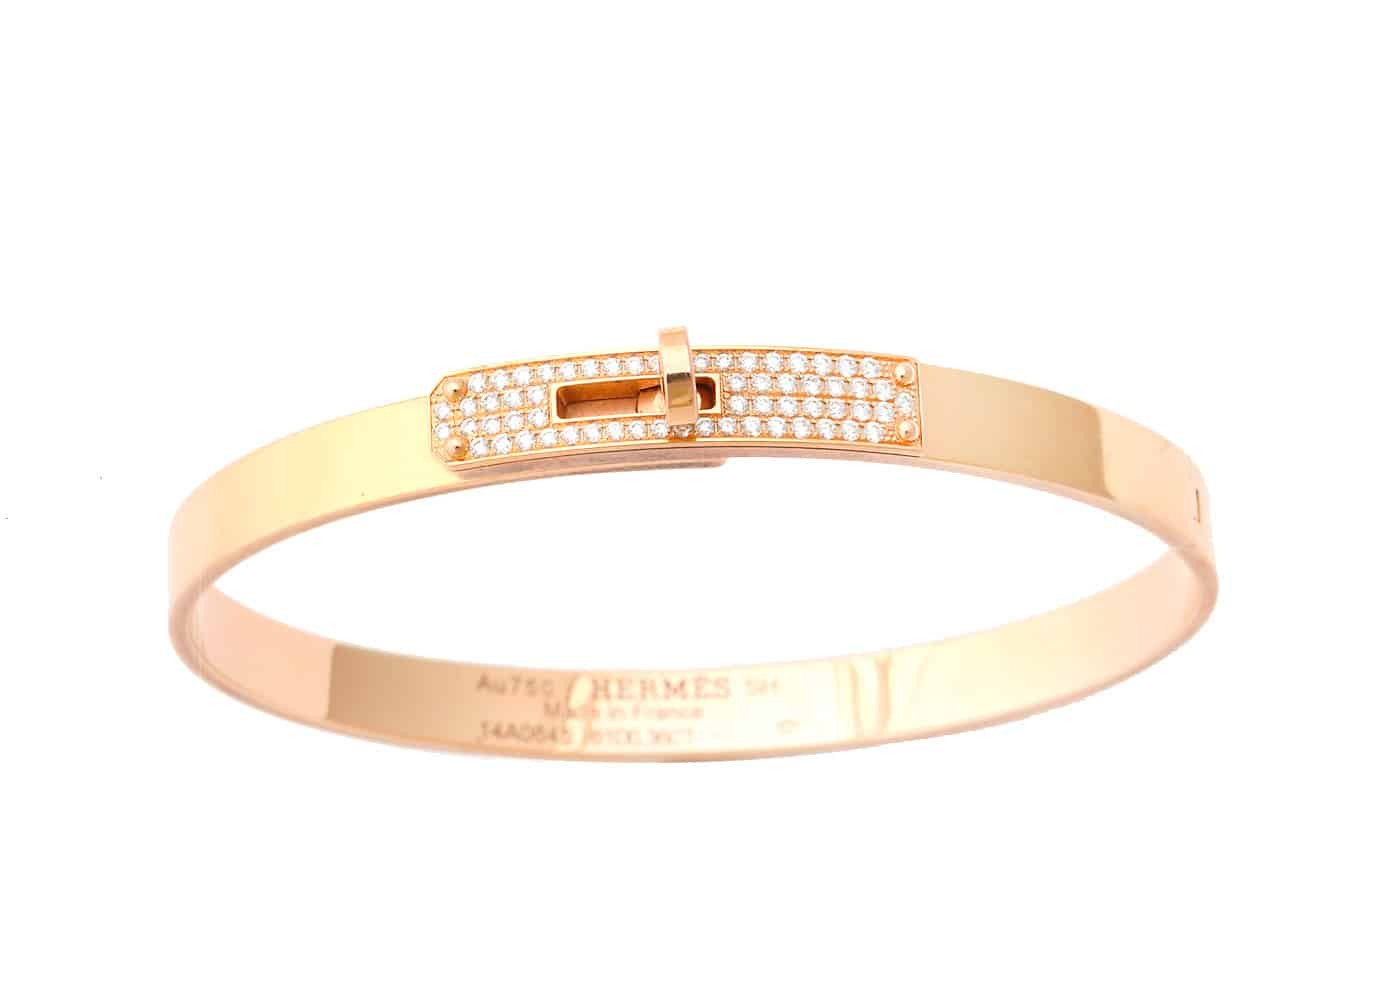 Hermes Kelly Bracelet
 hermes kelly bracelet in 18k rose gold